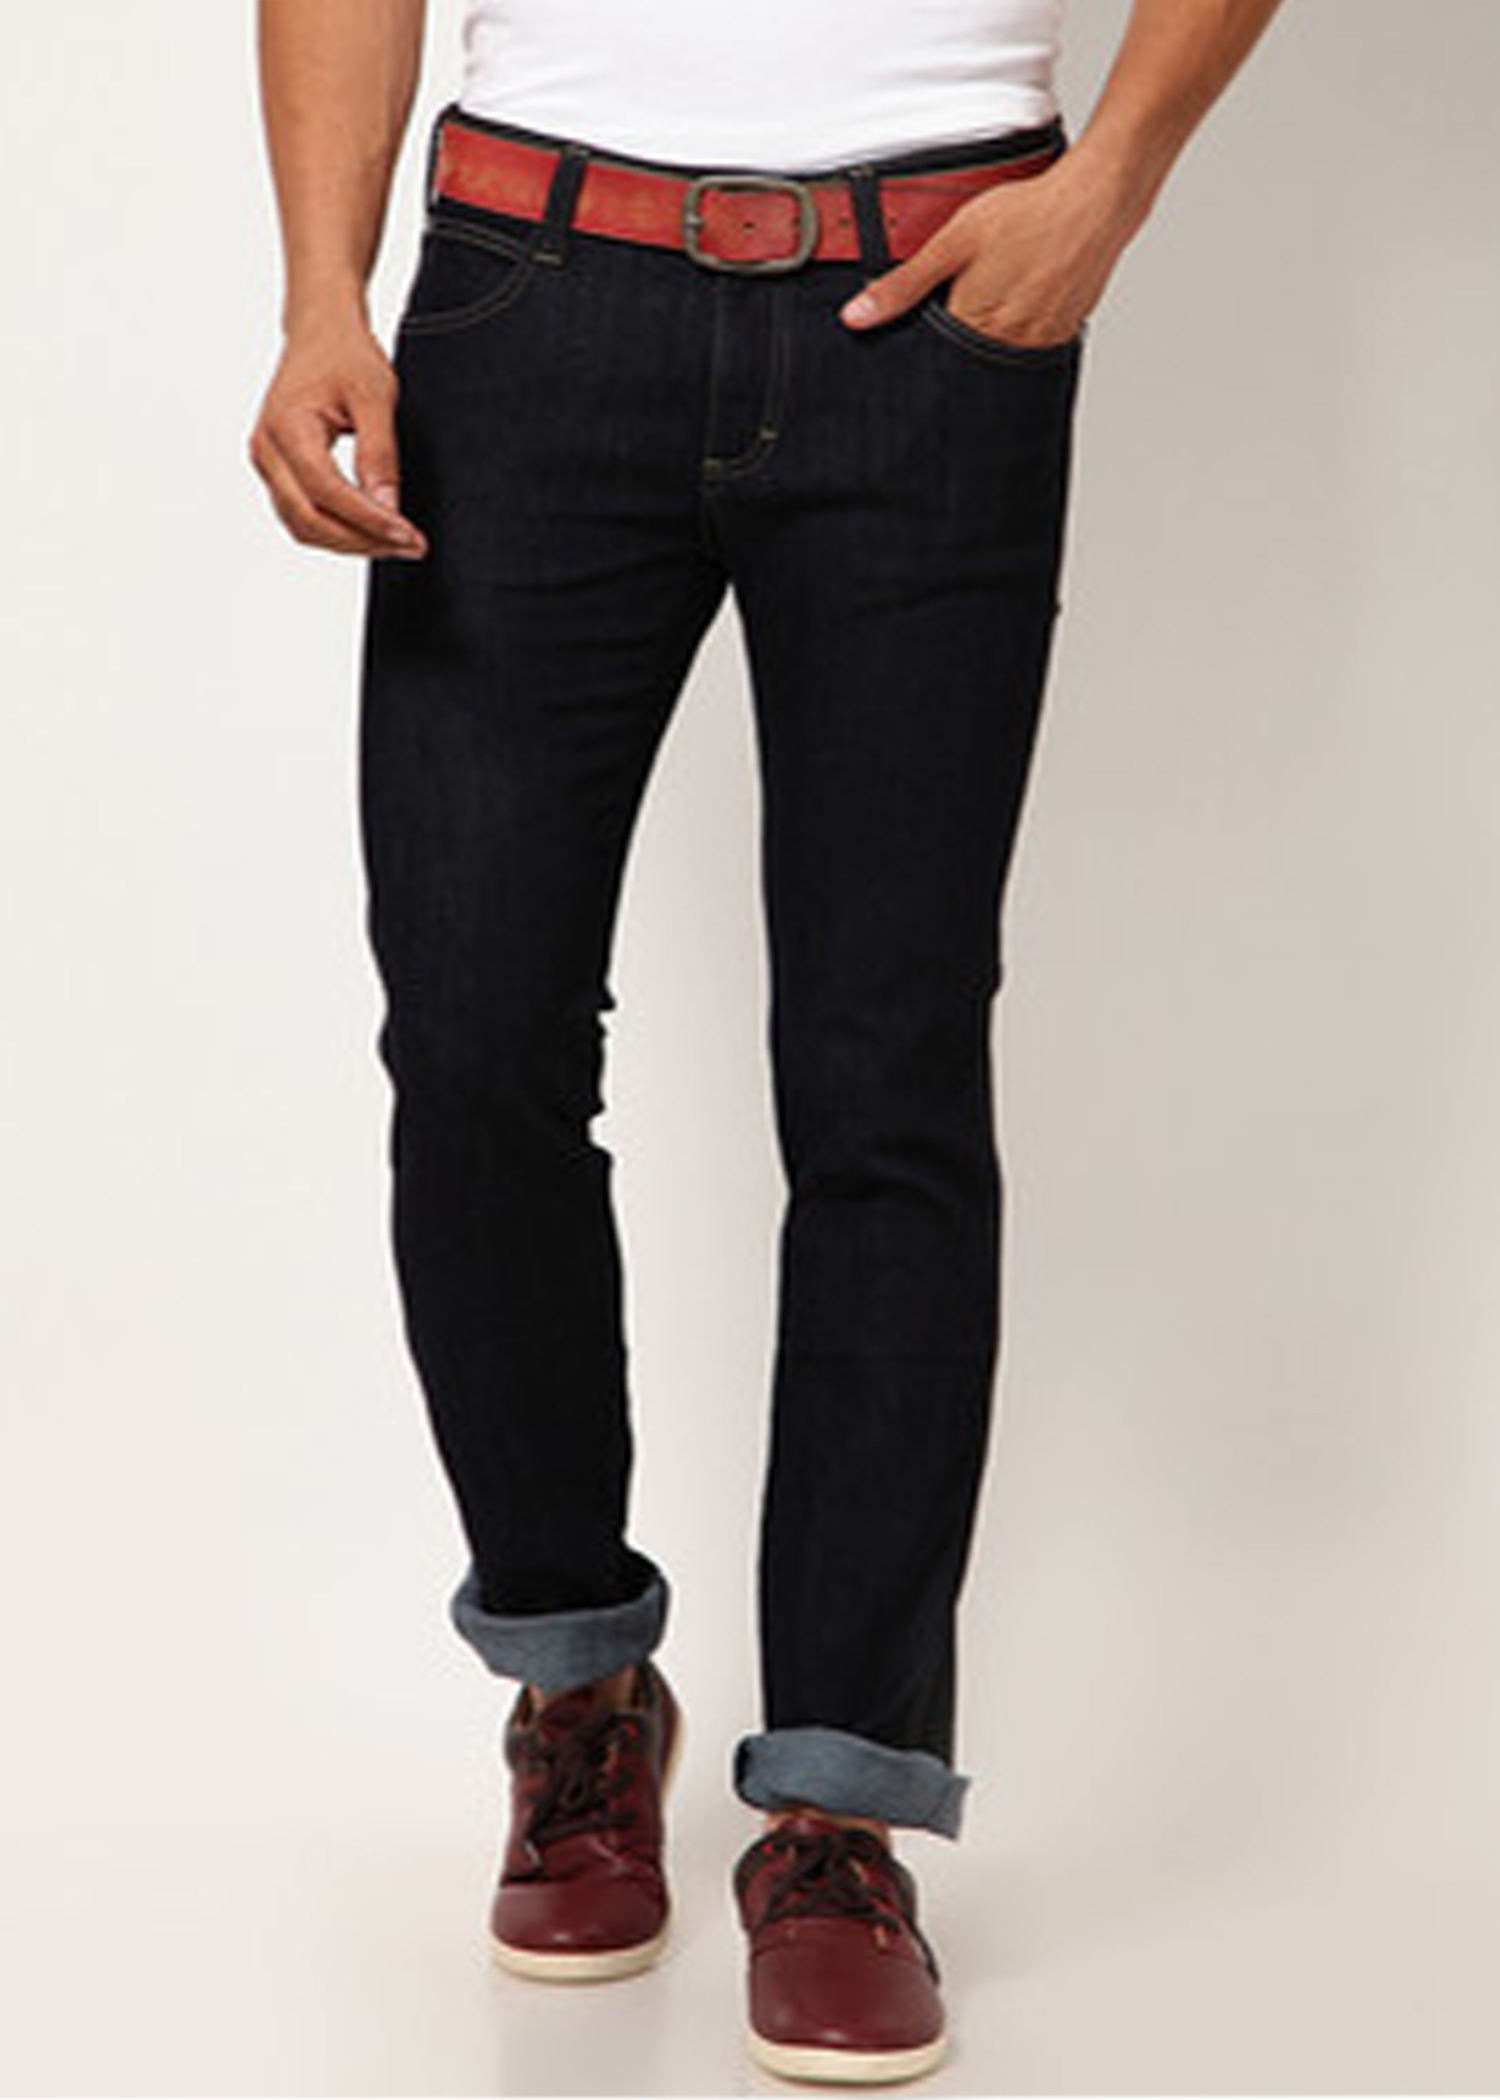 Crown Tailor - Jeans Pant